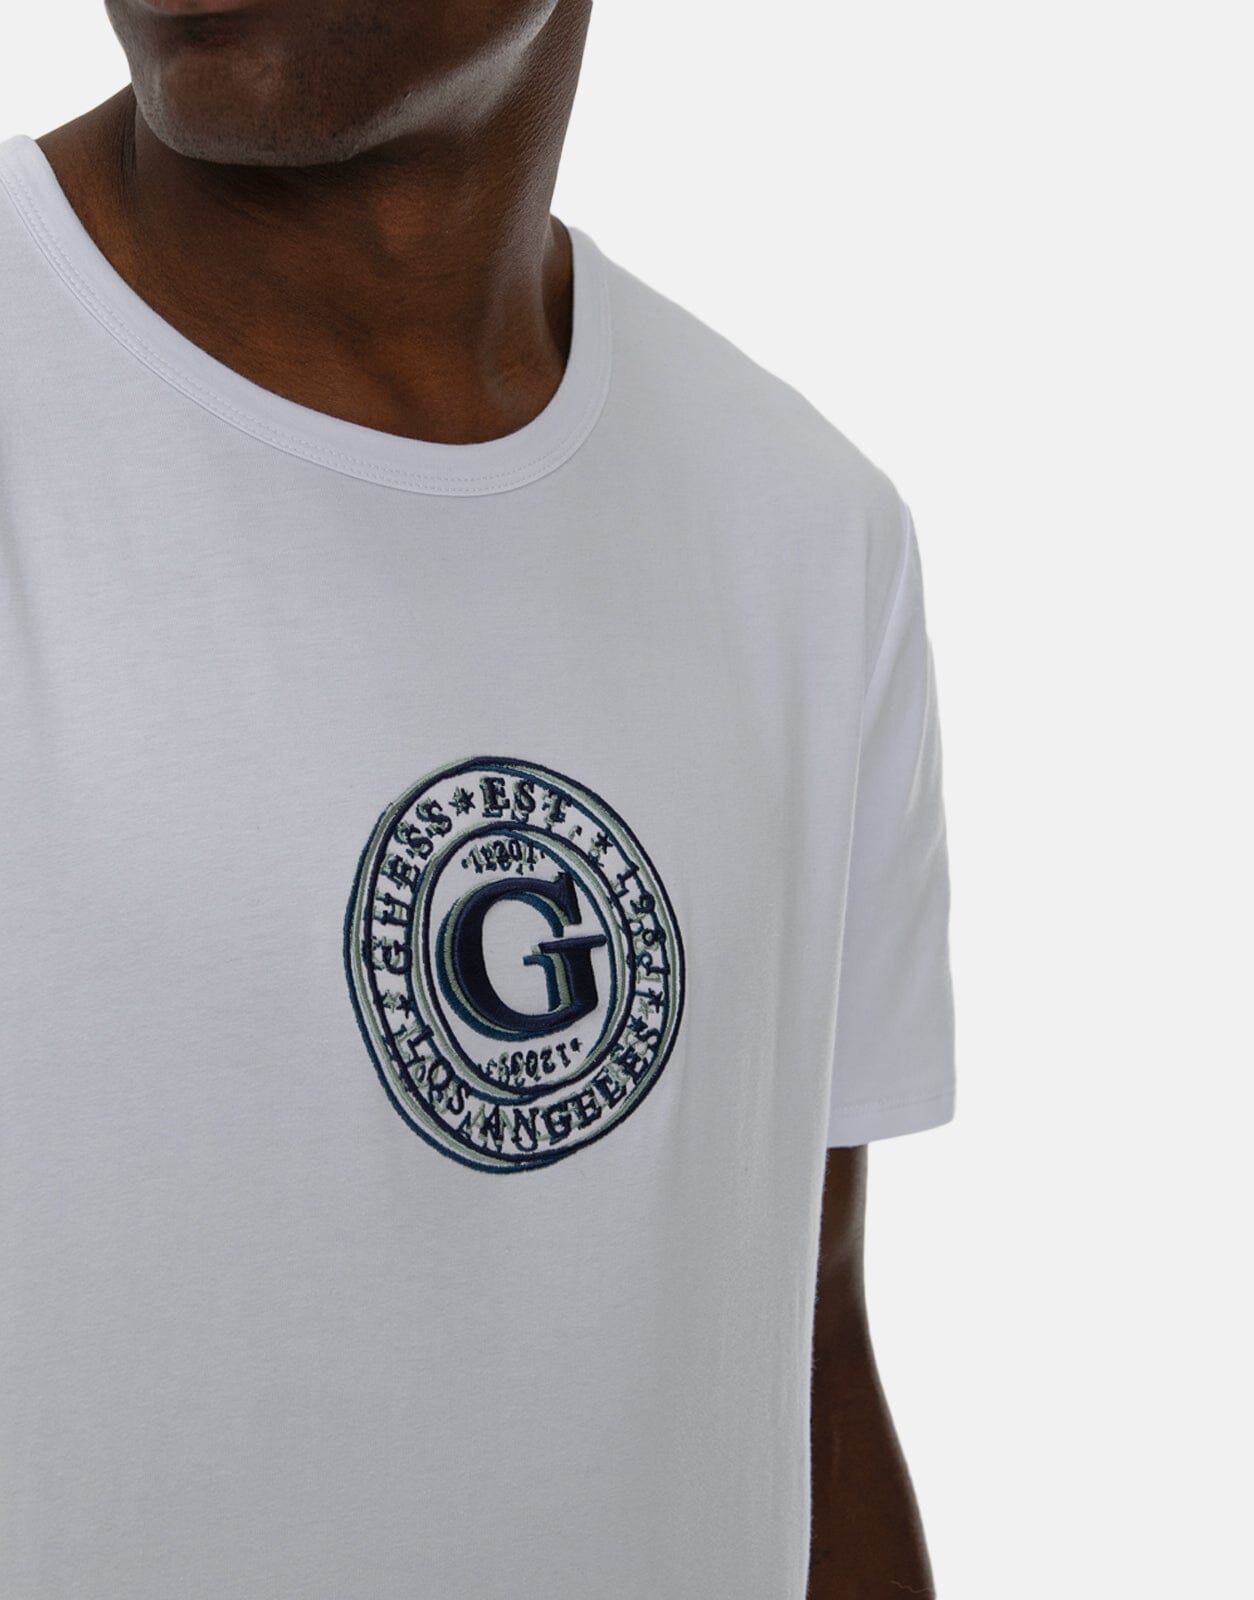 Guess Round Logo T-Shirt White - Subwear